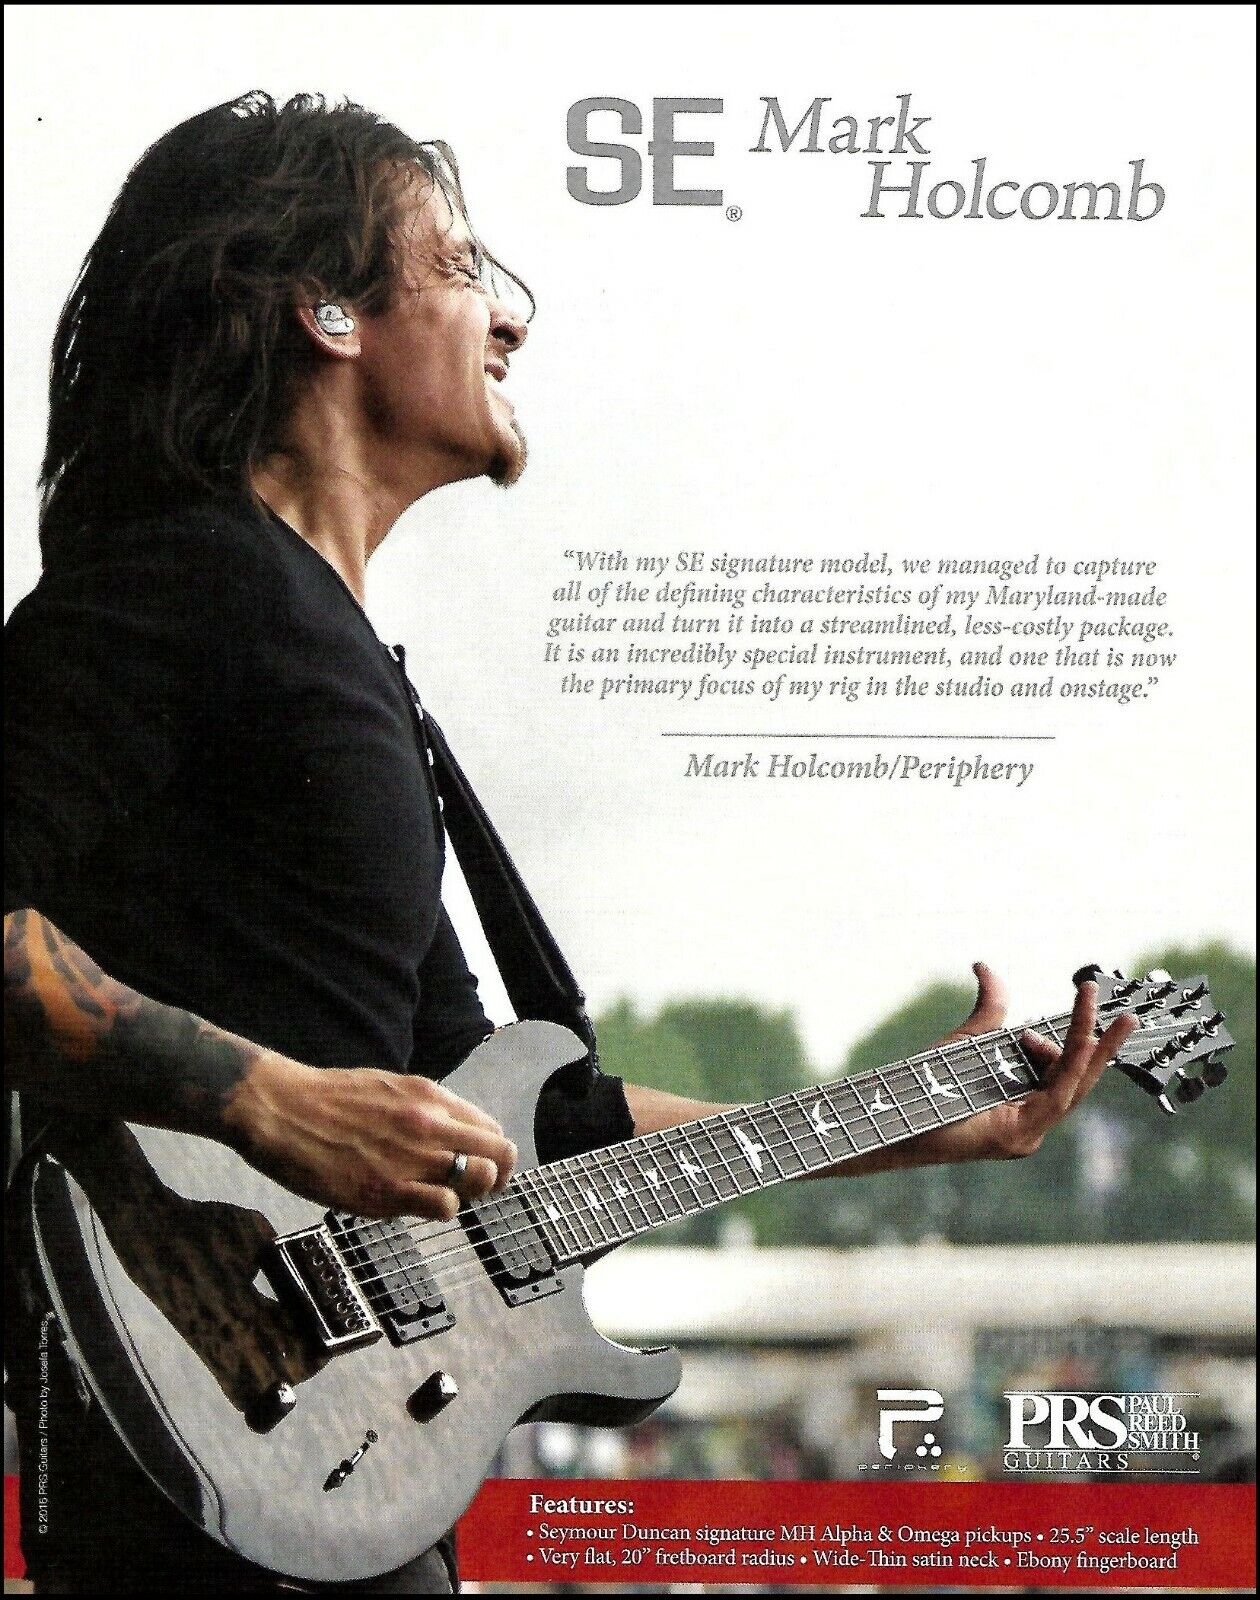  Periphery Mark Holcomb Signature PRS SE guitar advertisement 8 x 11 ad print